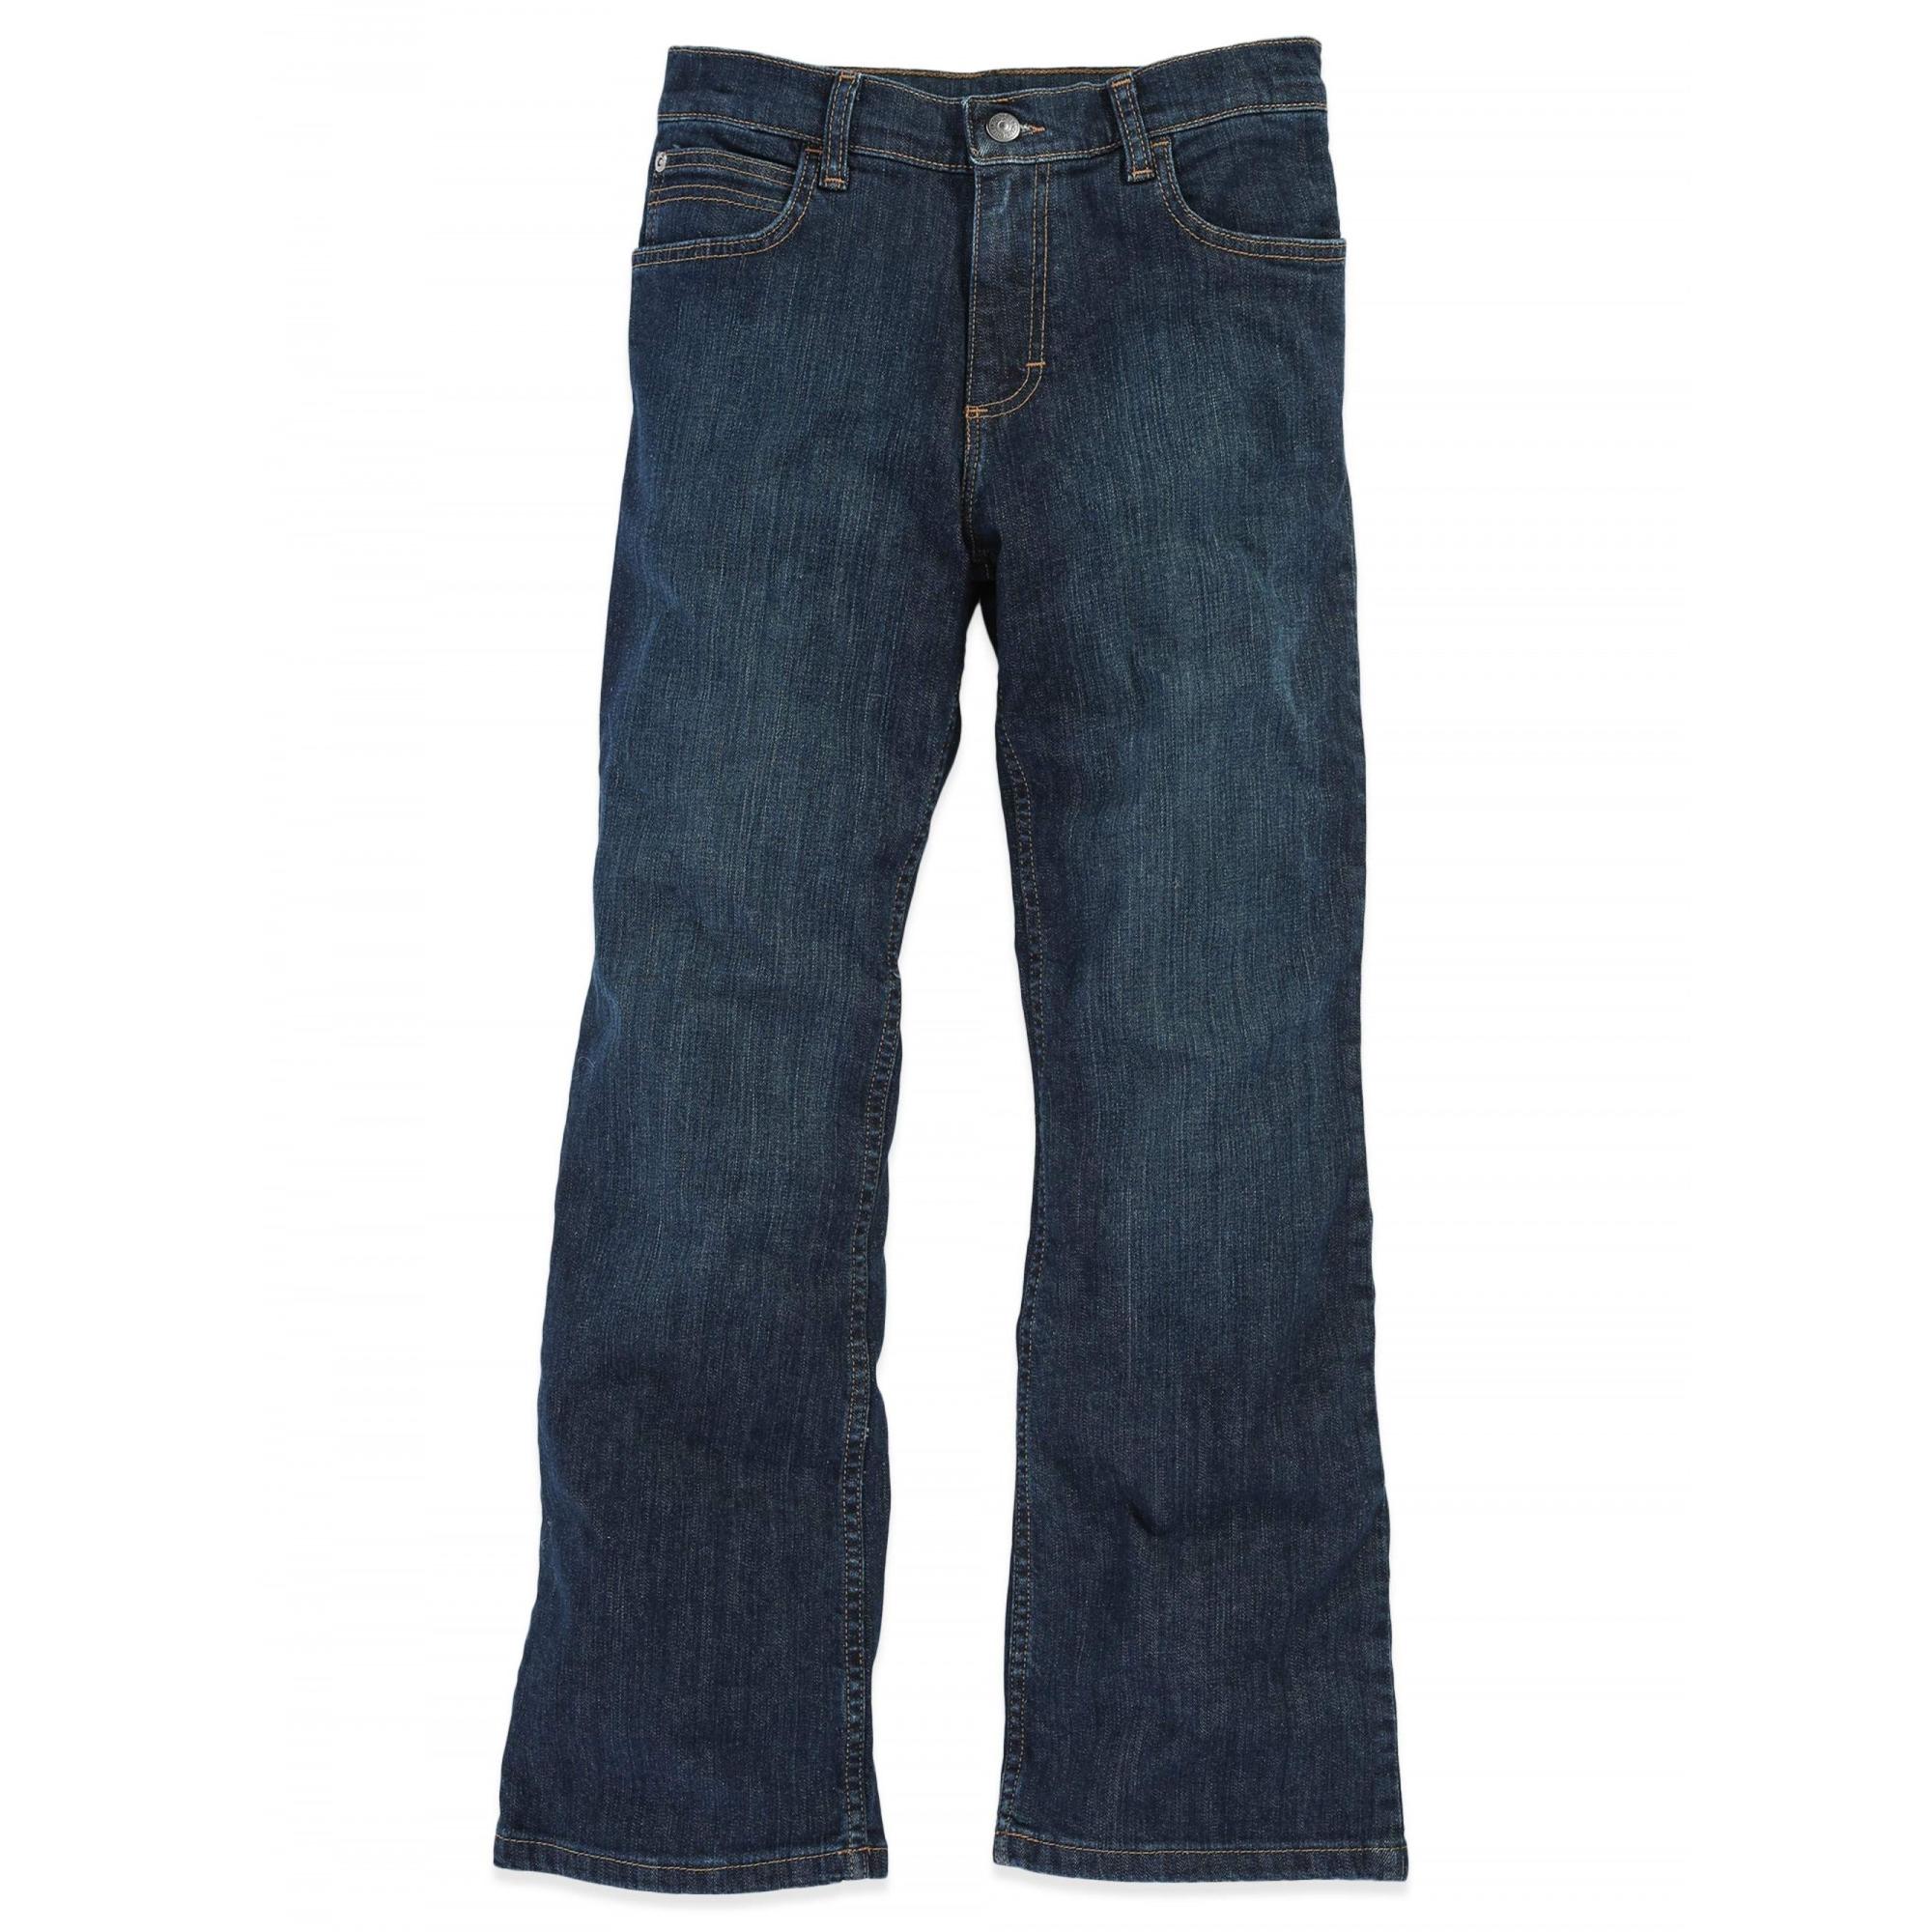 Wrangler Boys Bootcut Denim Jeans, Sizes 4-18 & Husky - image 1 of 6